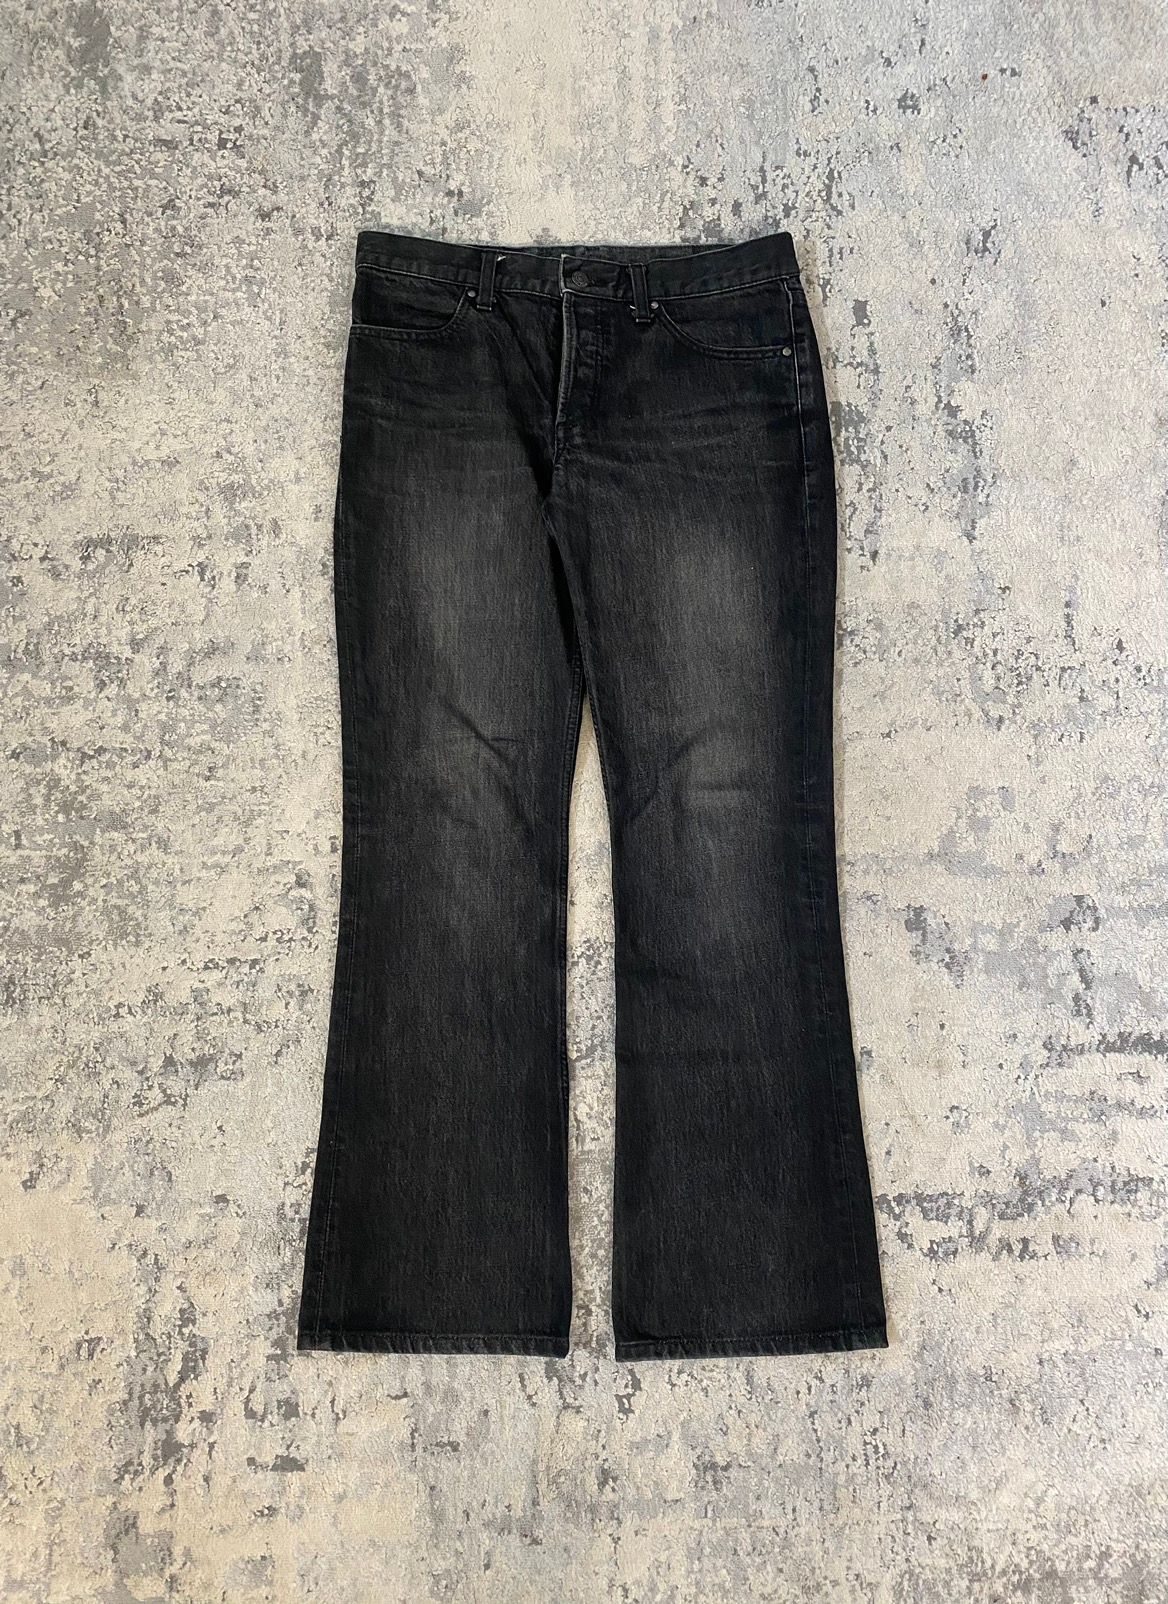 Shellac [SOLD]Shellac Faded Black Bootcut Jeans Size US 30 / EU 46 - 4 Thumbnail